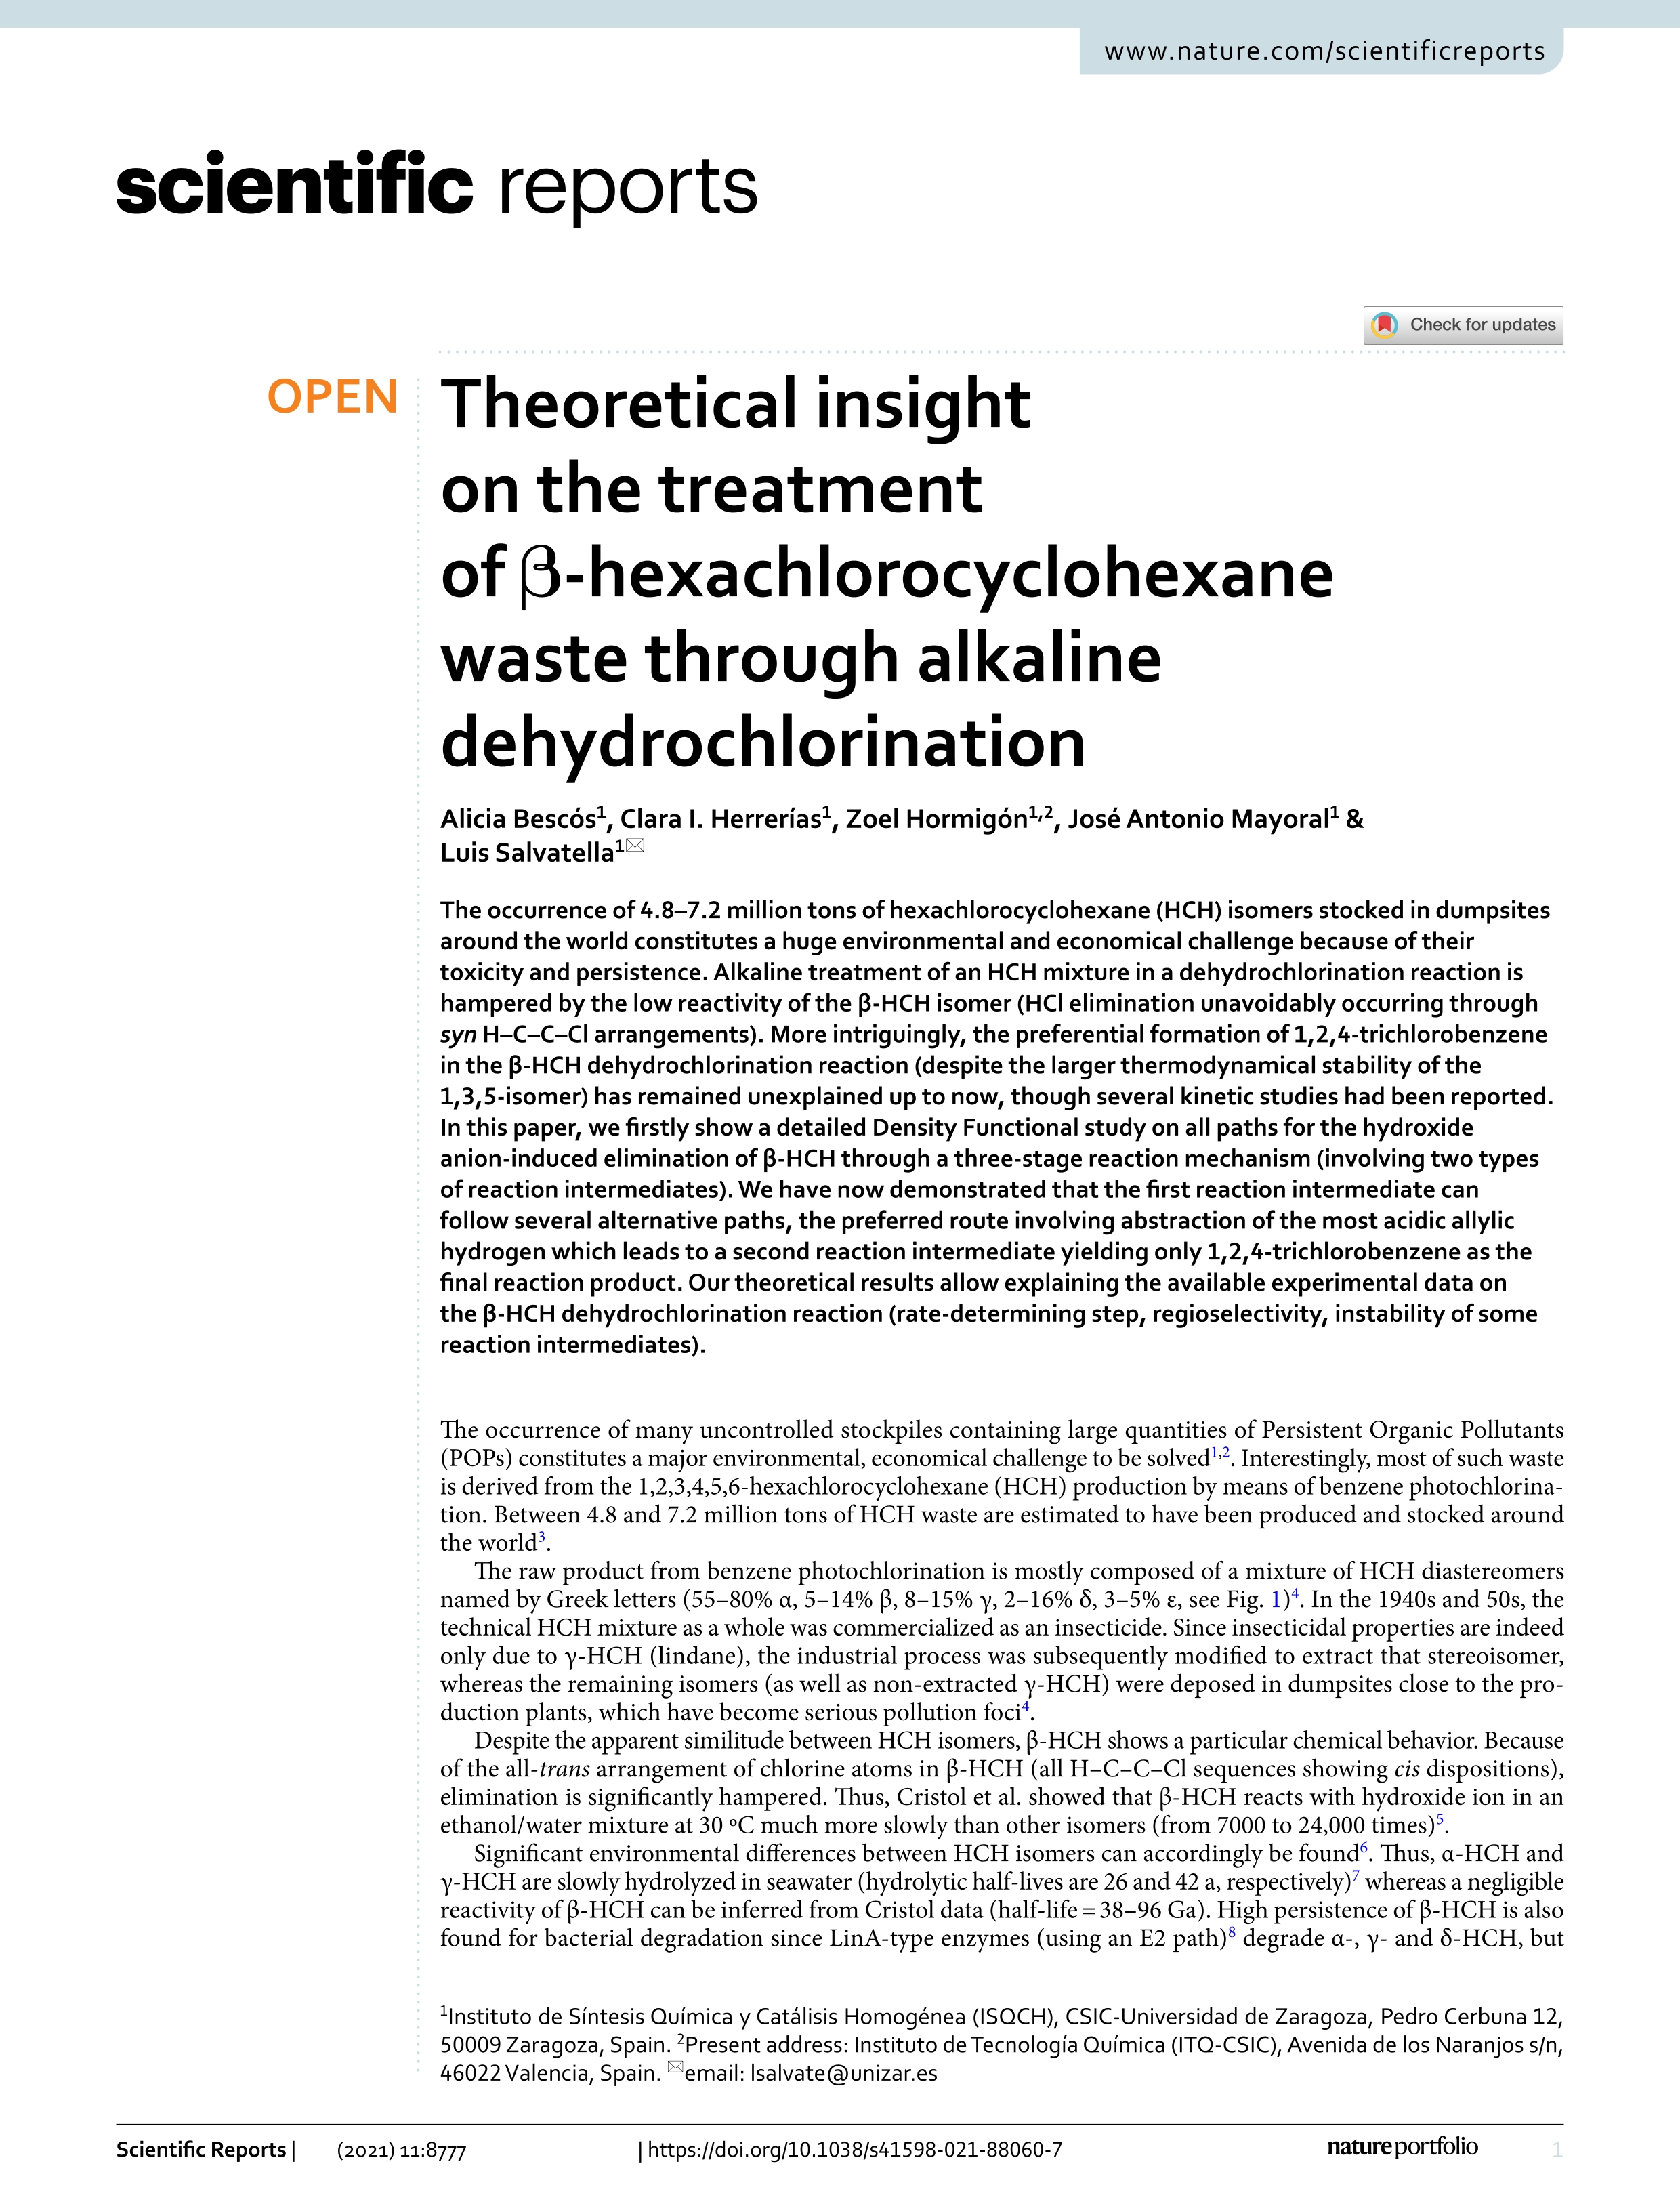 Theoretical insight on the treatment of ß-hexachlorocyclohexane waste through alkaline dehydrochlorination